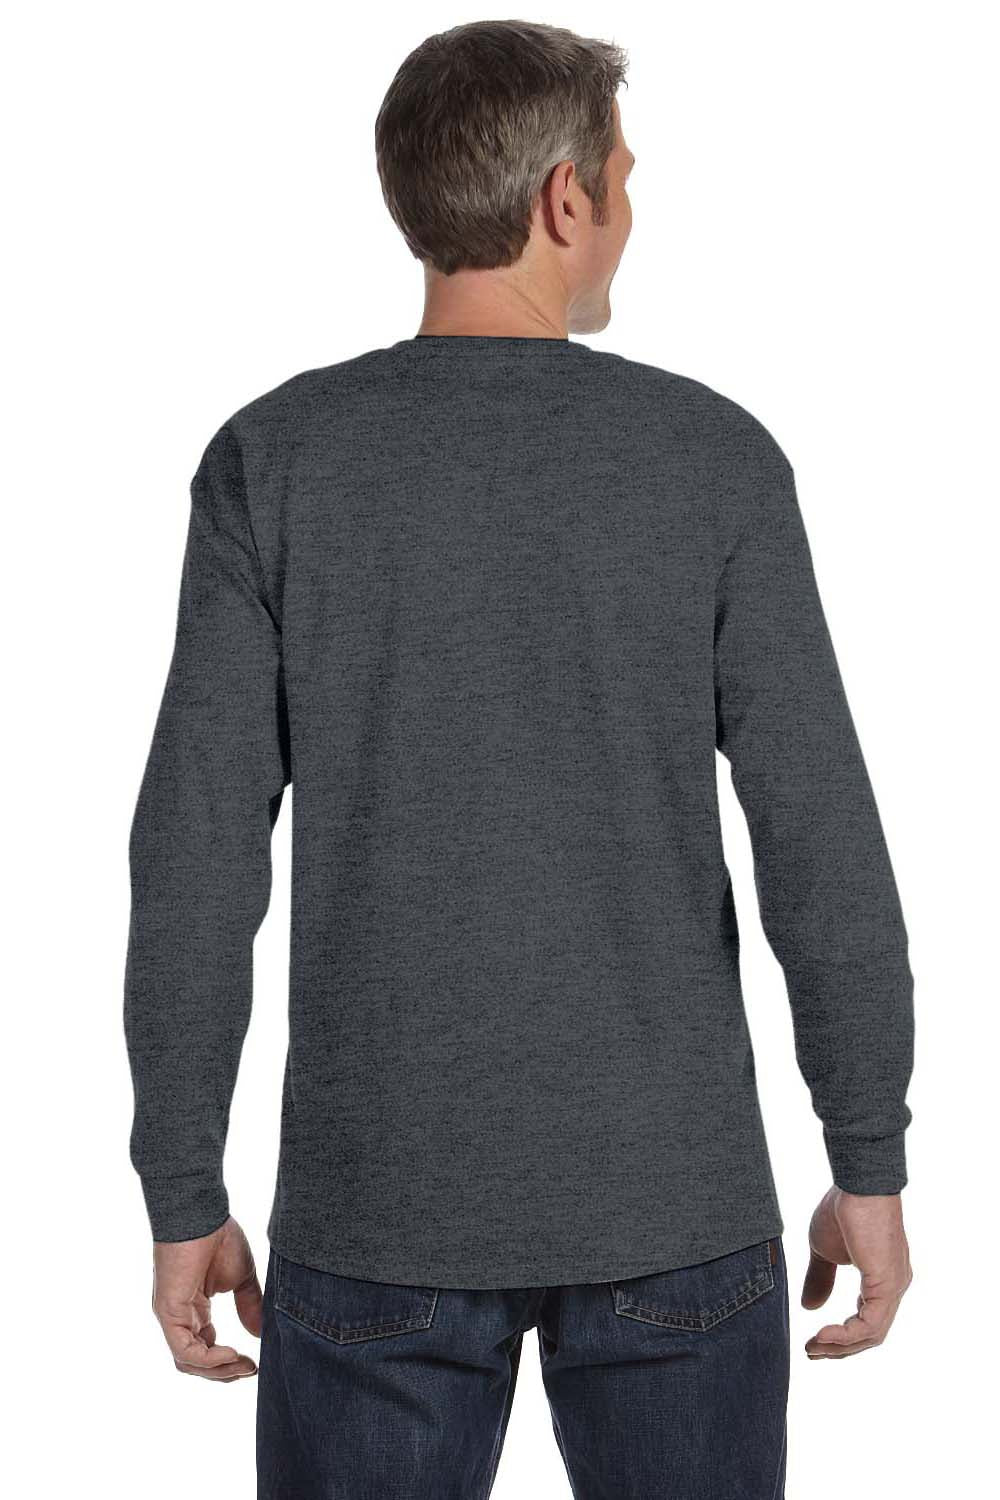 Hanes 5586 Mens ComfortSoft Long Sleeve Crewneck T-Shirt Heather Charcoal Grey Back